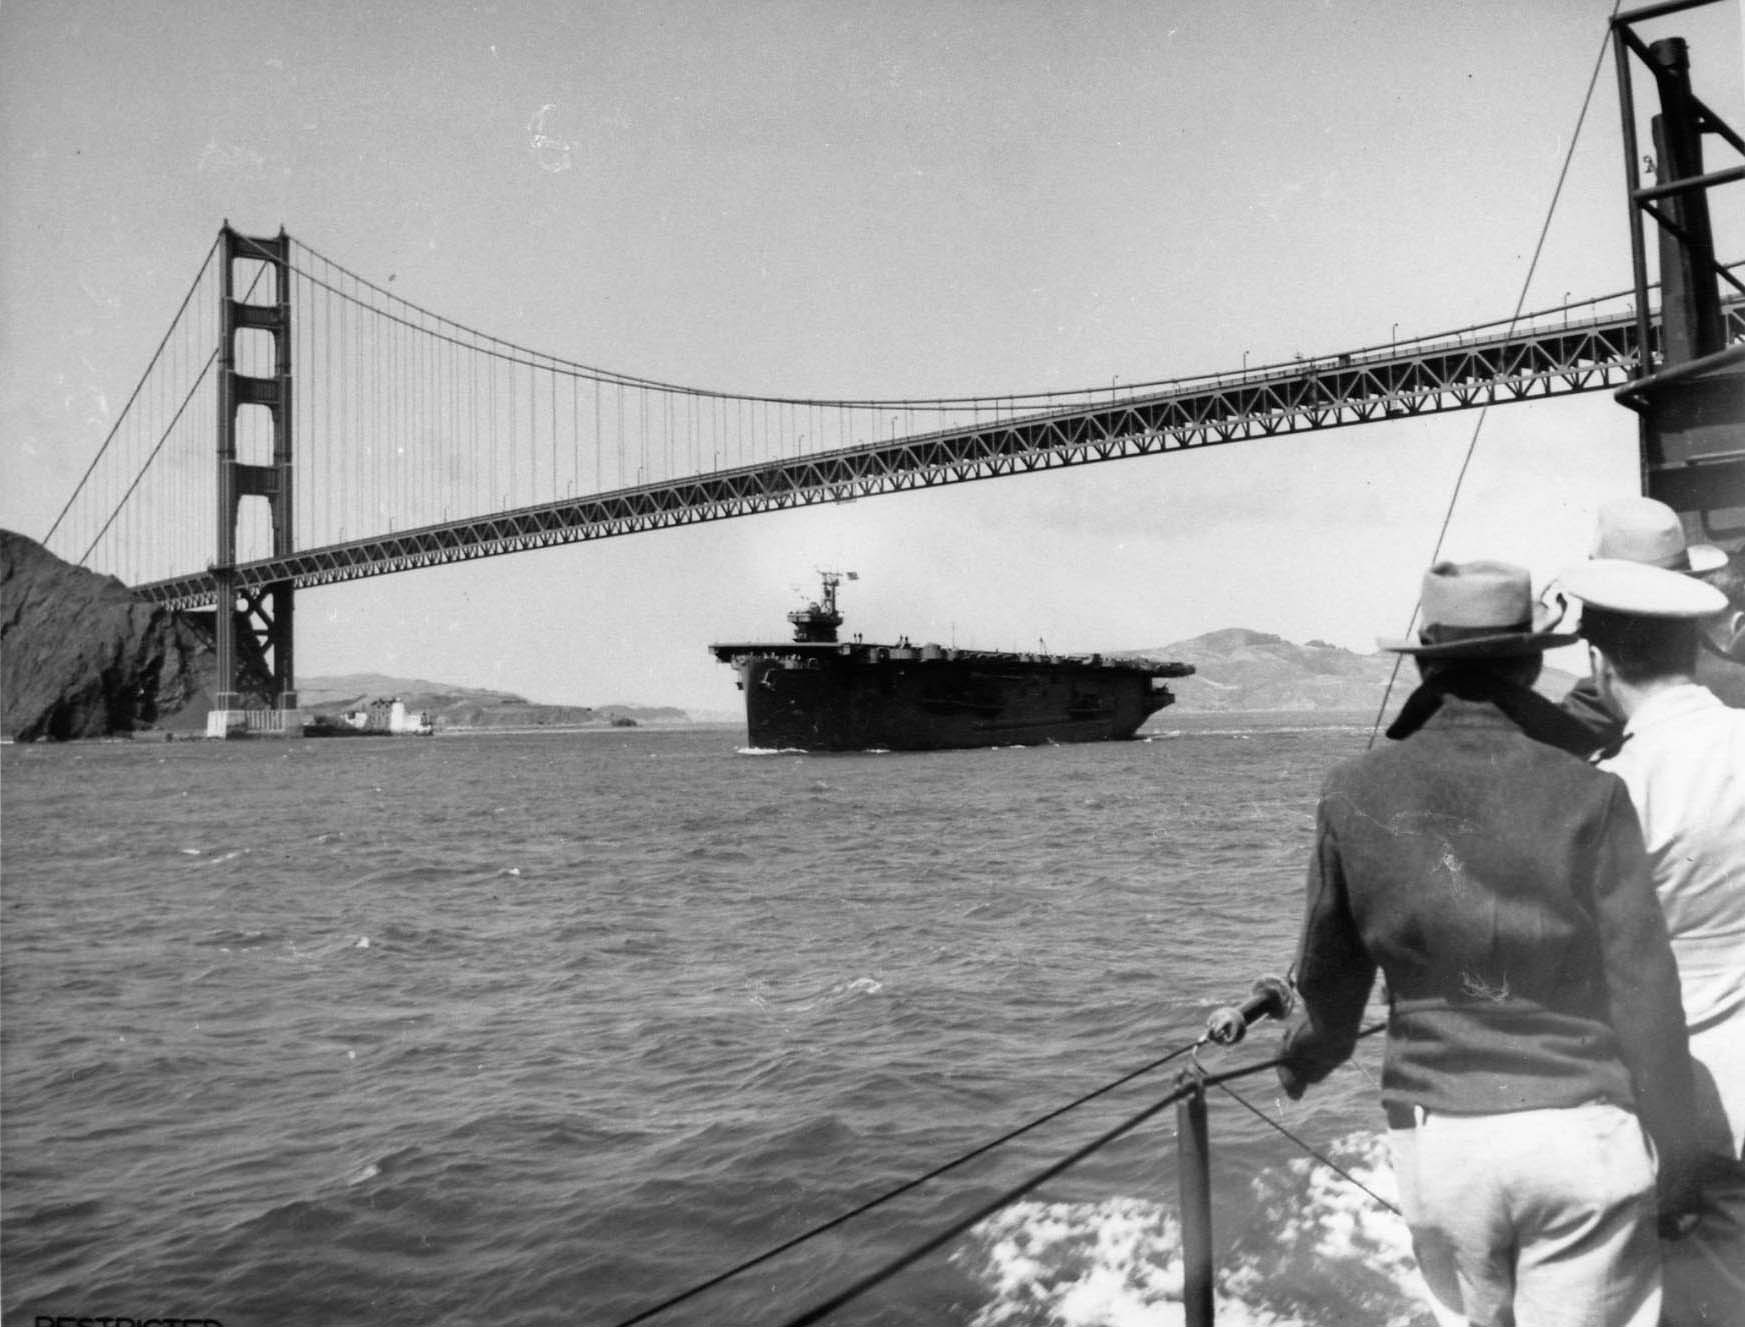 USS Copahee passing under the Golden Gate Bridge, San Francisco Bay, California, United States, 15 Jul 1943